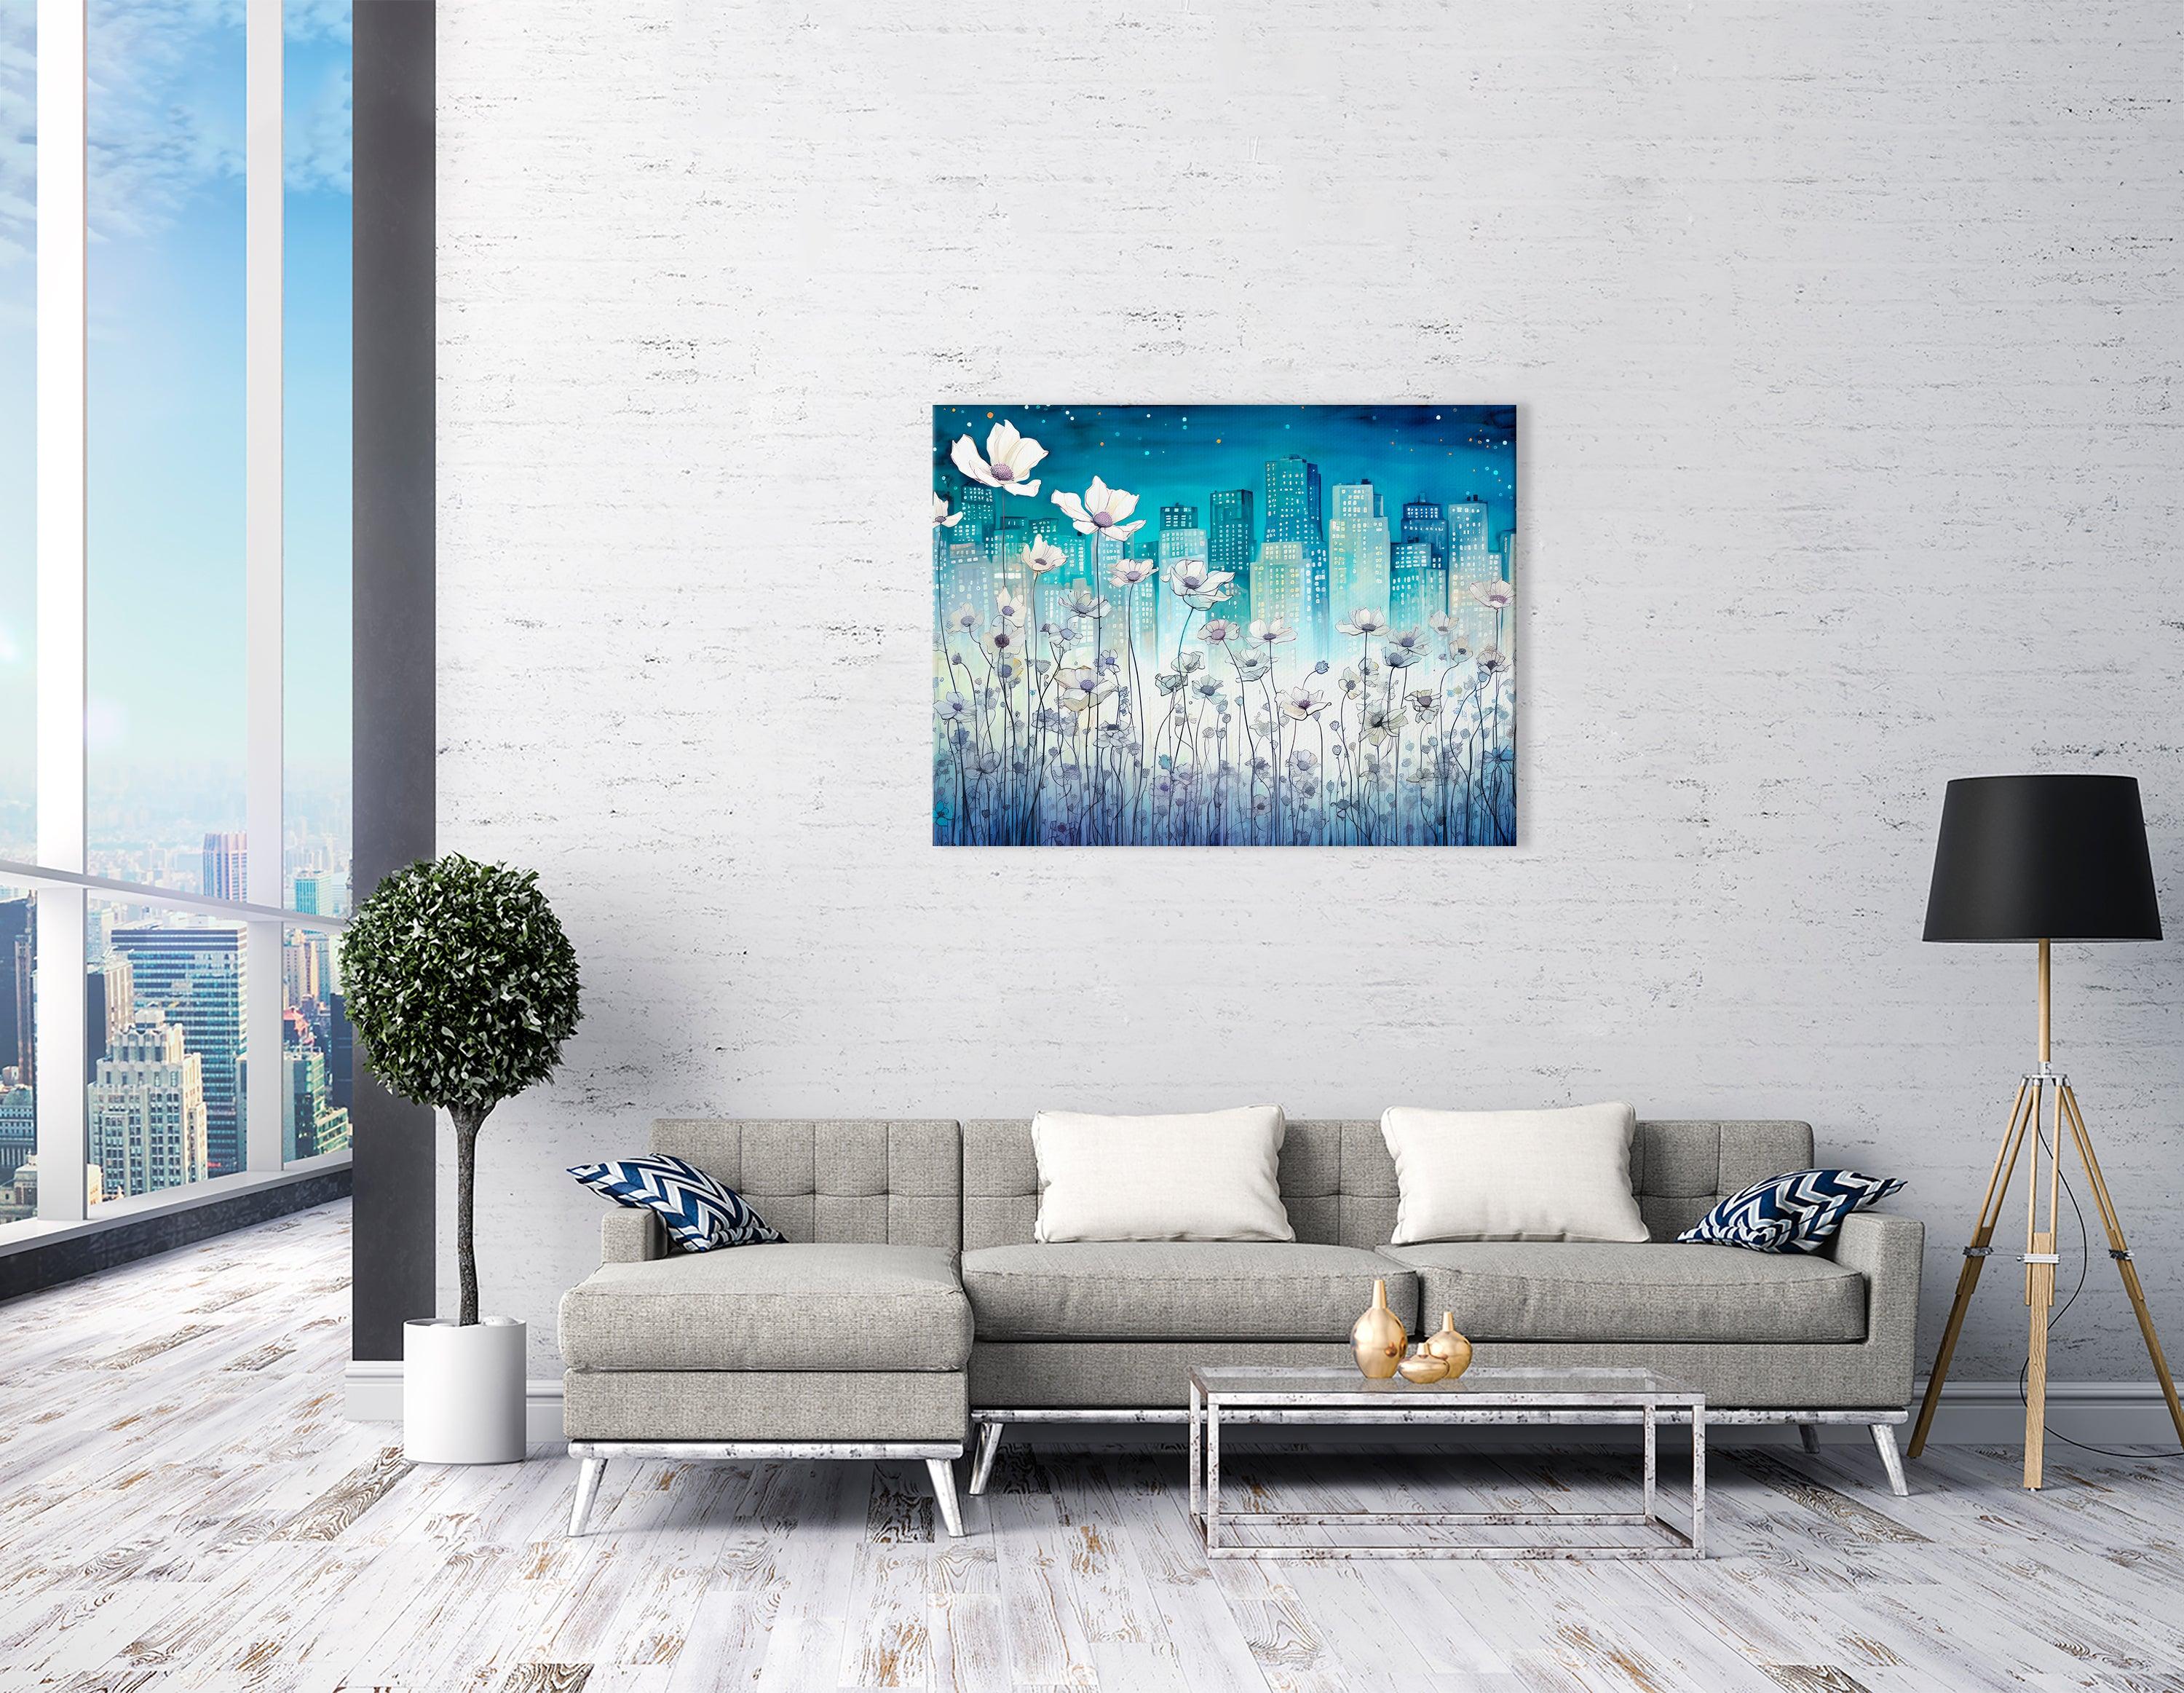 Dreamlike Cityscape with Tiny White Flowers - Canvas Print - Artoholica Ready to Hang Canvas Print